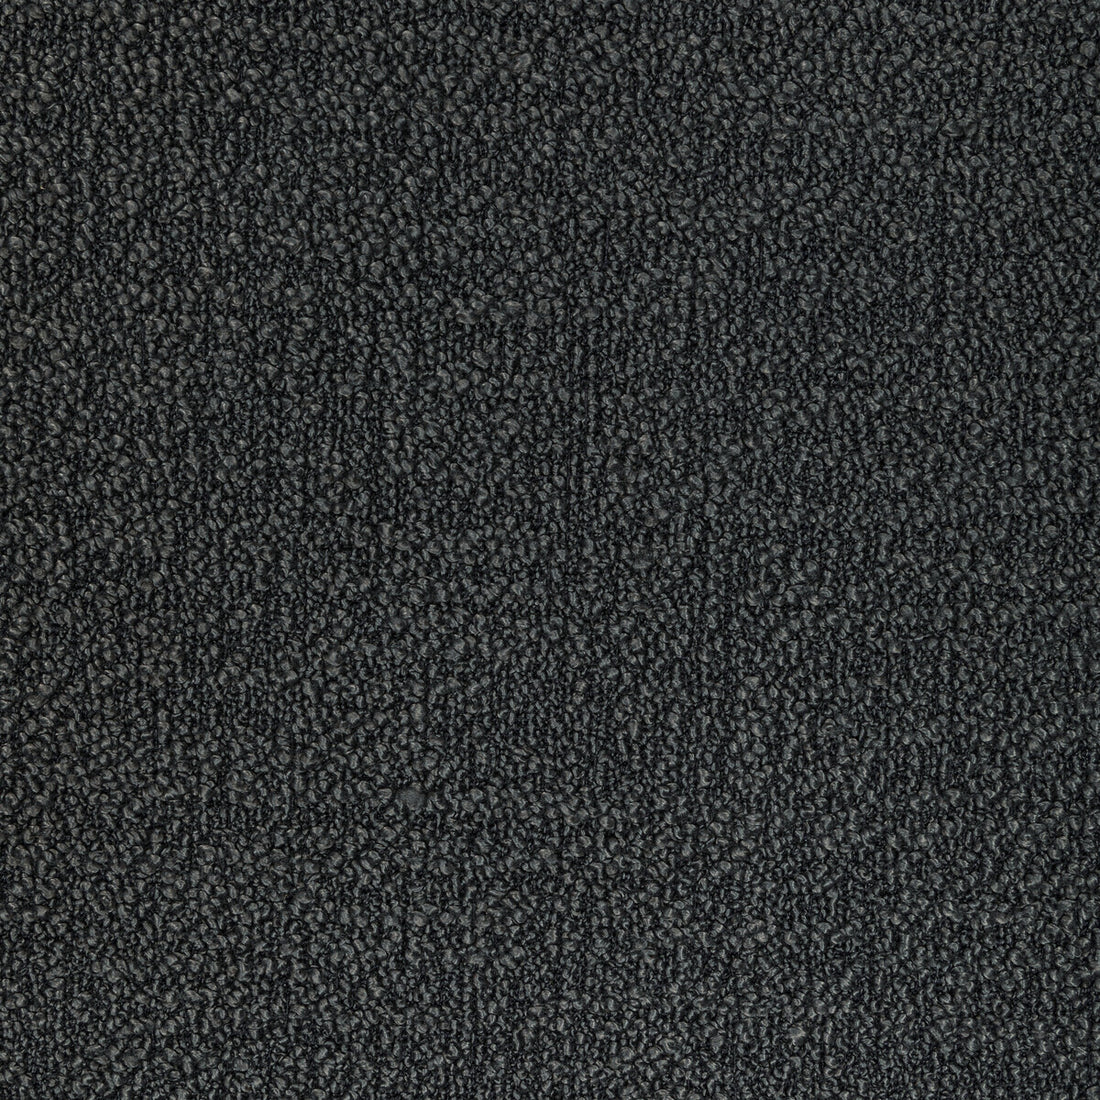 Kravet Smart fabric in 36857-21 color - pattern 36857.21.0 - by Kravet Smart in the Performance Kravetarmor collection